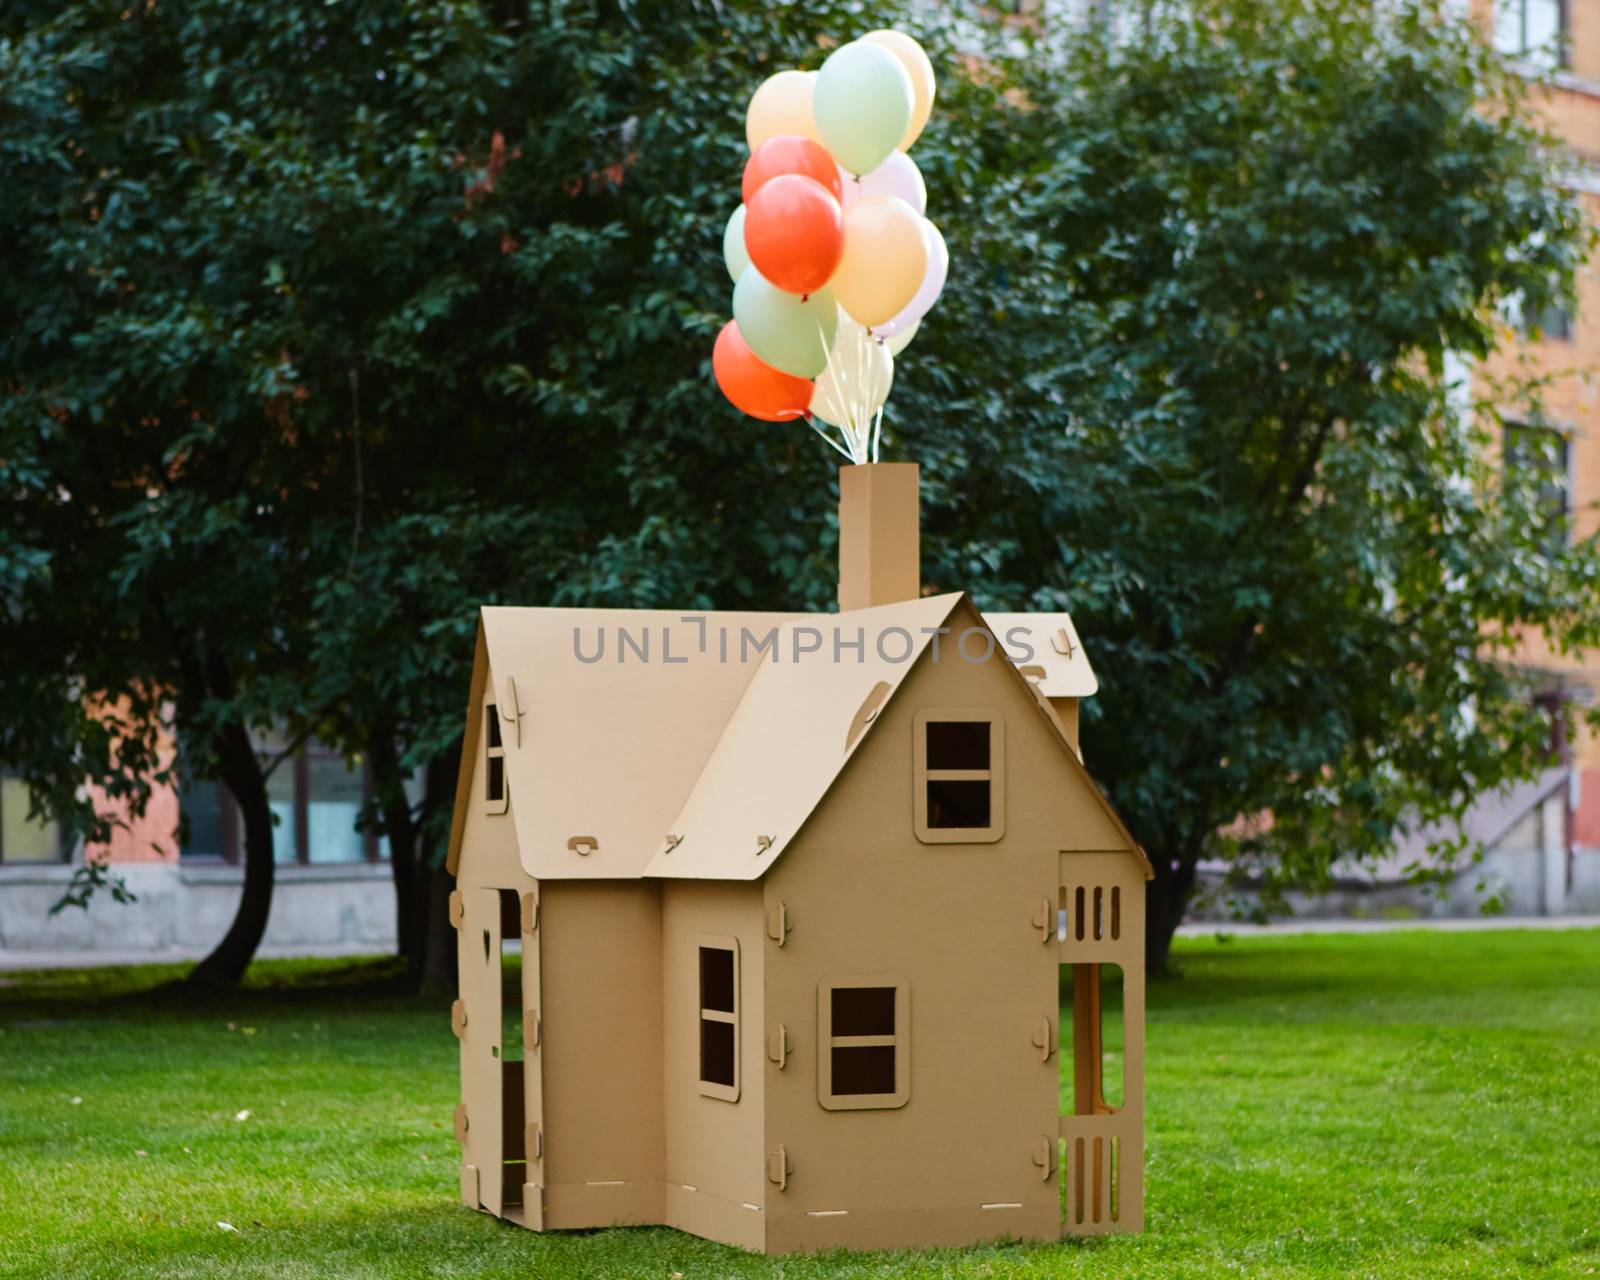 Cardboard playhouse in the backyard for kids. Eco concept by sarymsakov